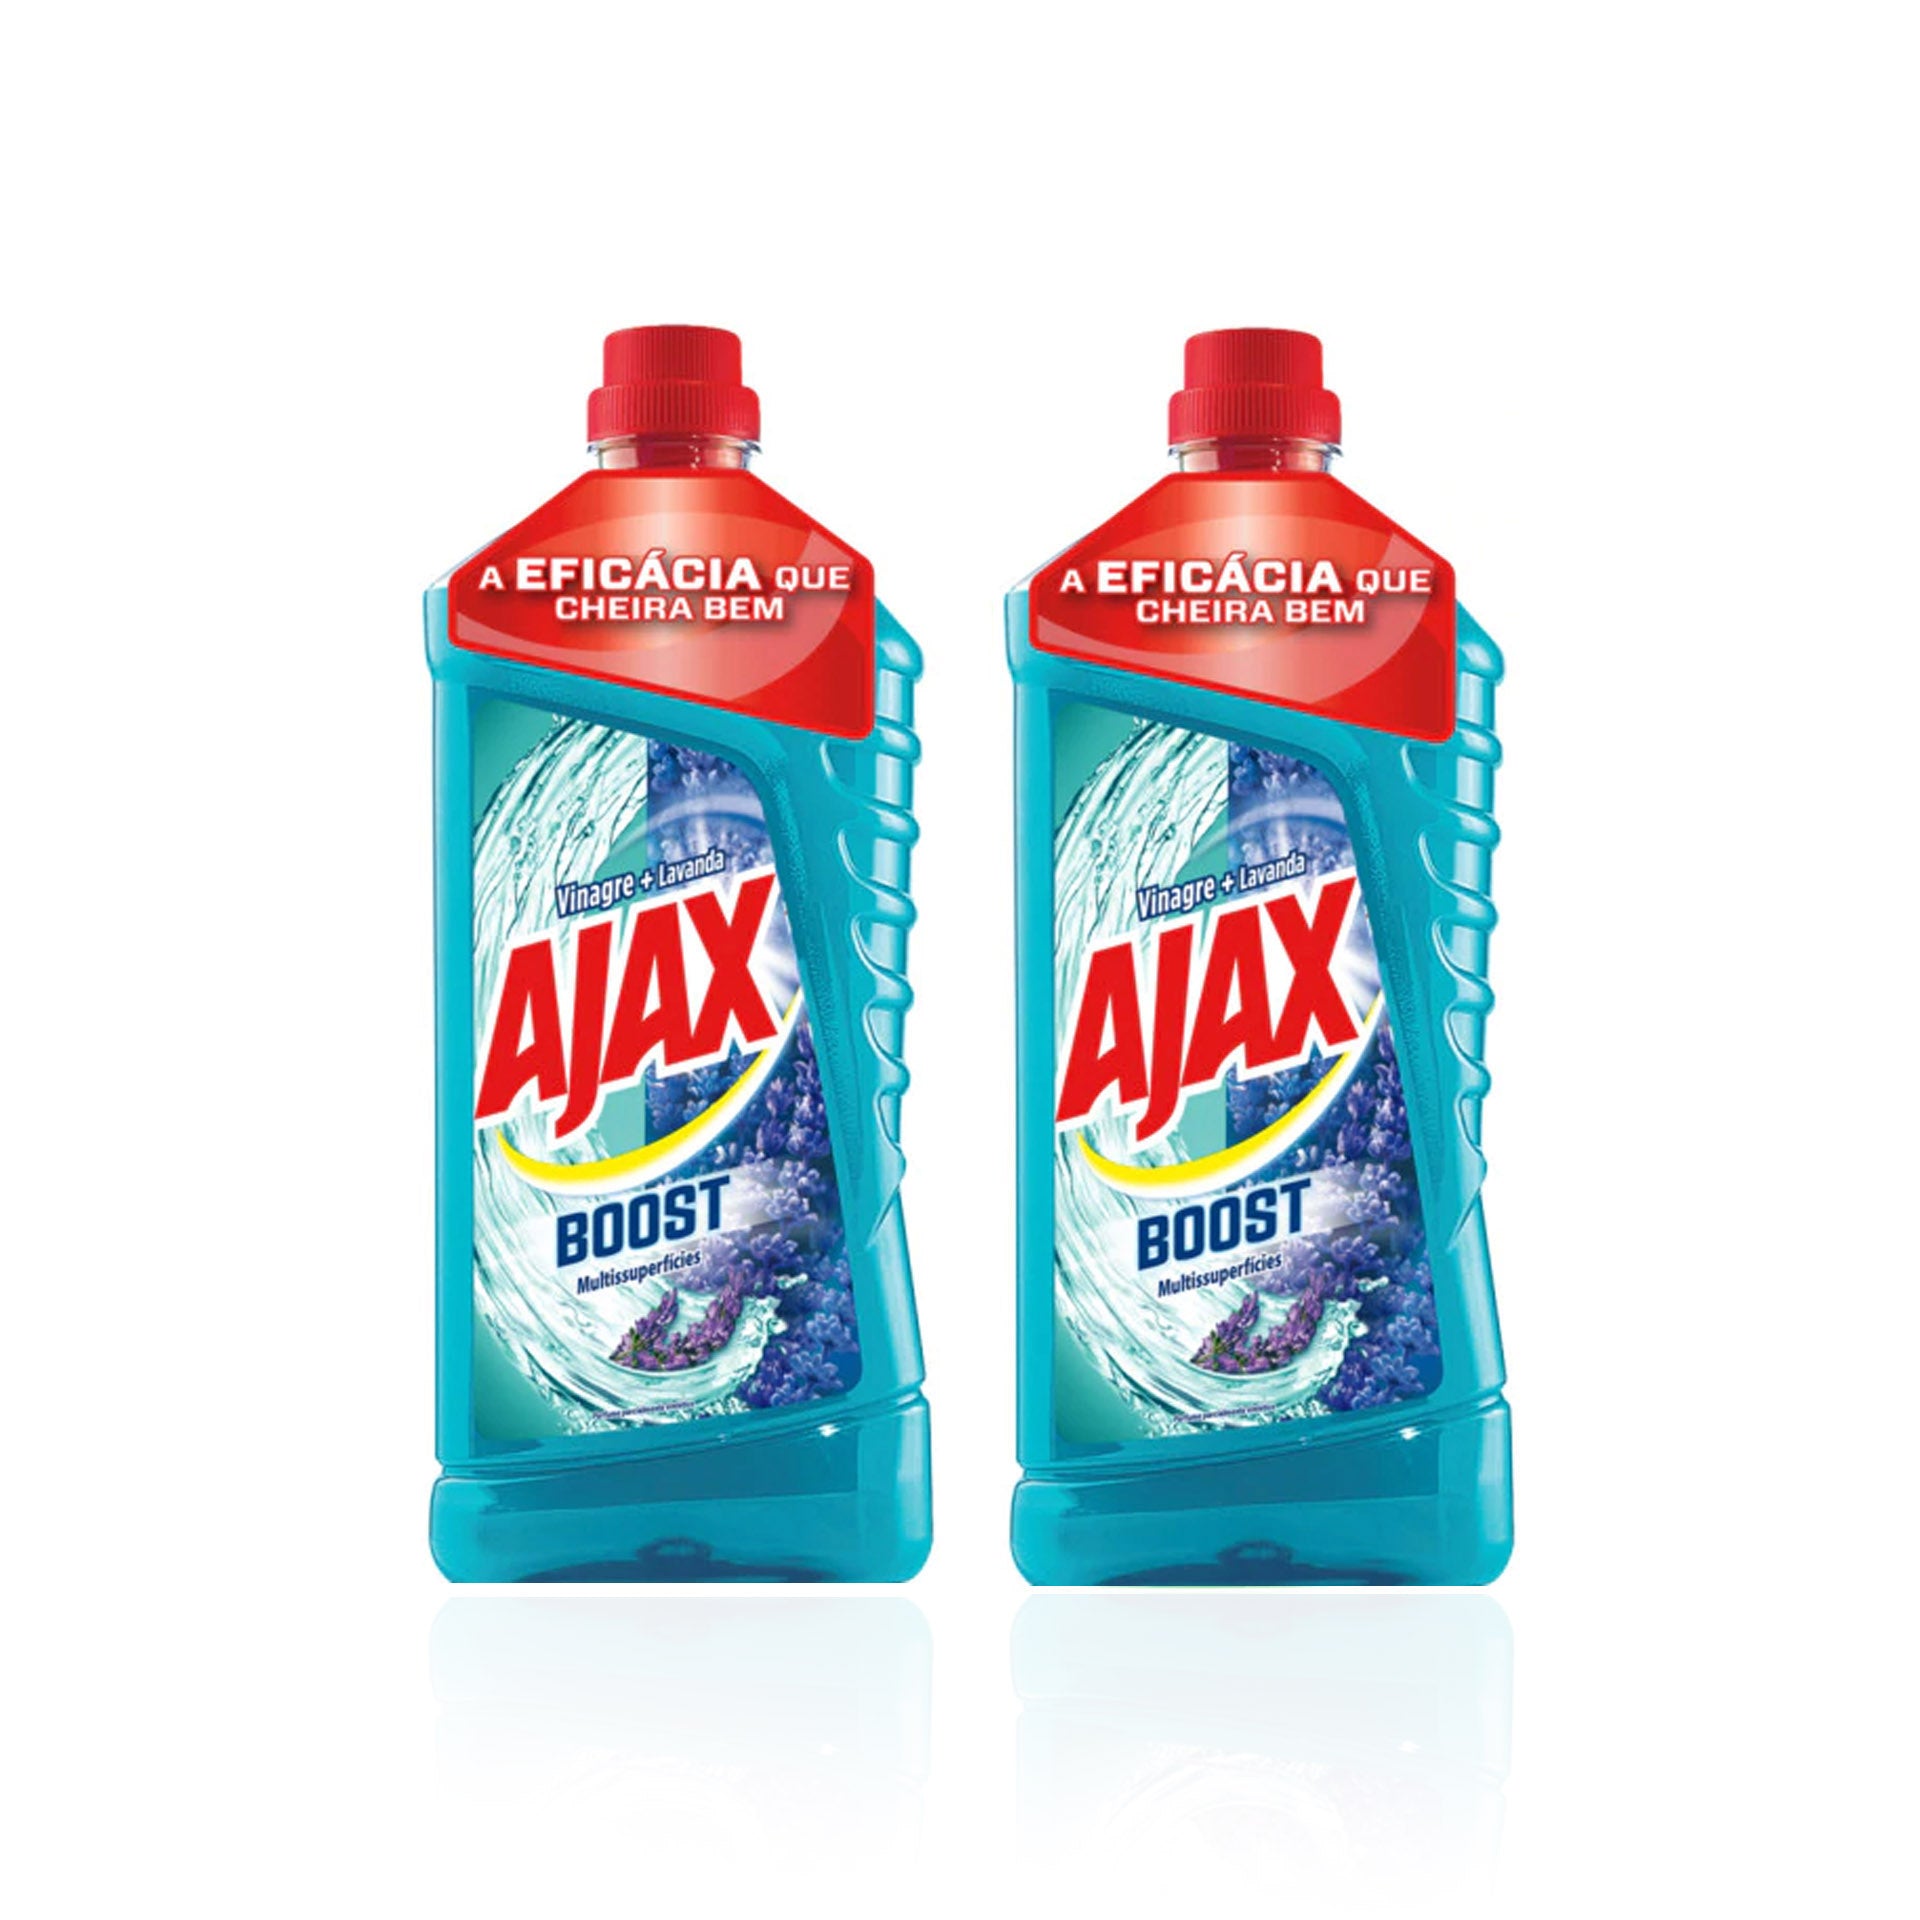 Ajax Boost Lava Tudo Vinagre Lavanda 1 L - Pack 2 x 1 L